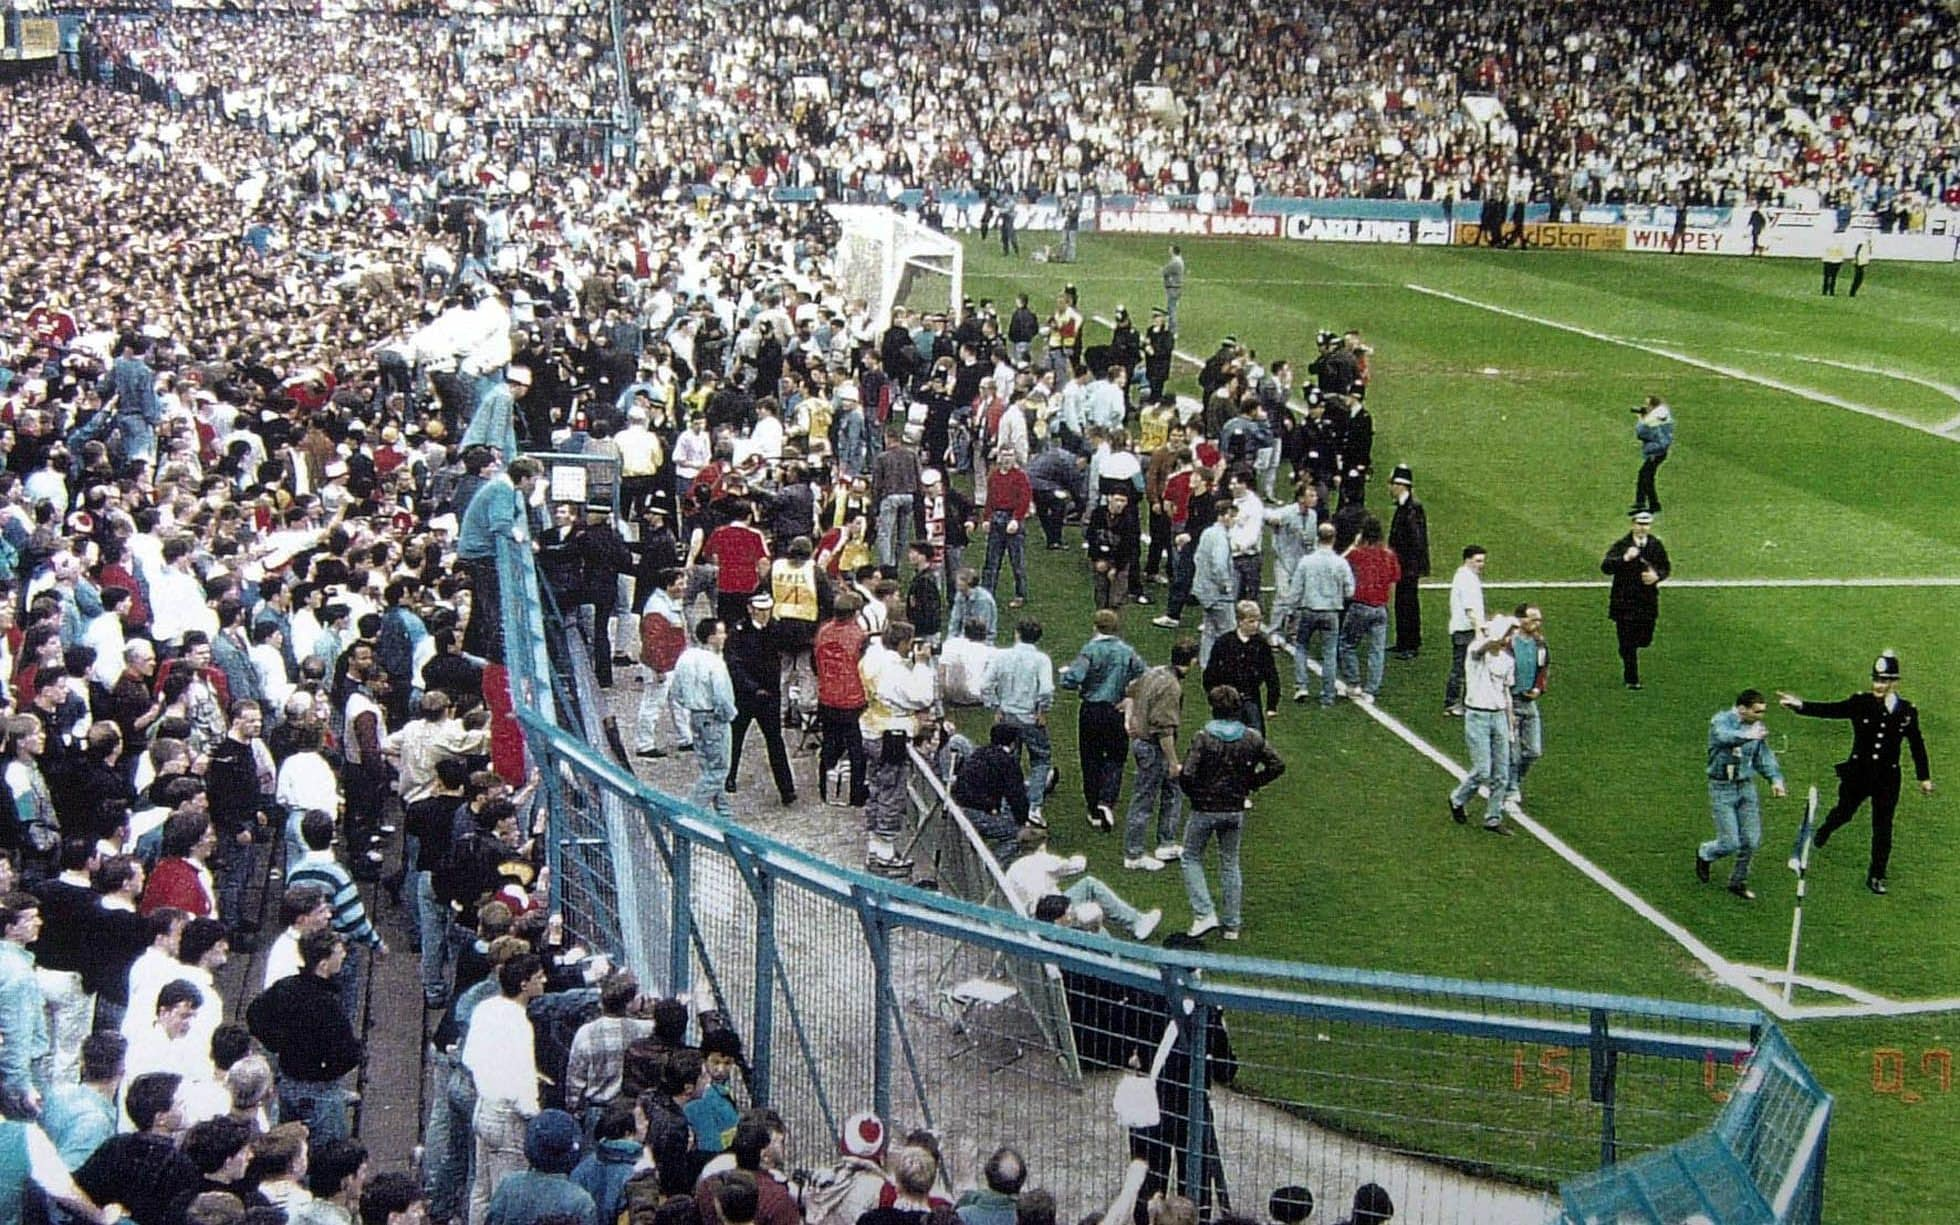 15 апреля 2011. Стадион Хиллсборо в Шеффилде, 1989. Стадион Хиллсборо в Шеффилде, 1989 год, Англия. Стадион Хиллсборо в Шеффилде 1989 год Англия давка. 15 Апреля 1989 года на стадионе Хиллсборо в Англии.